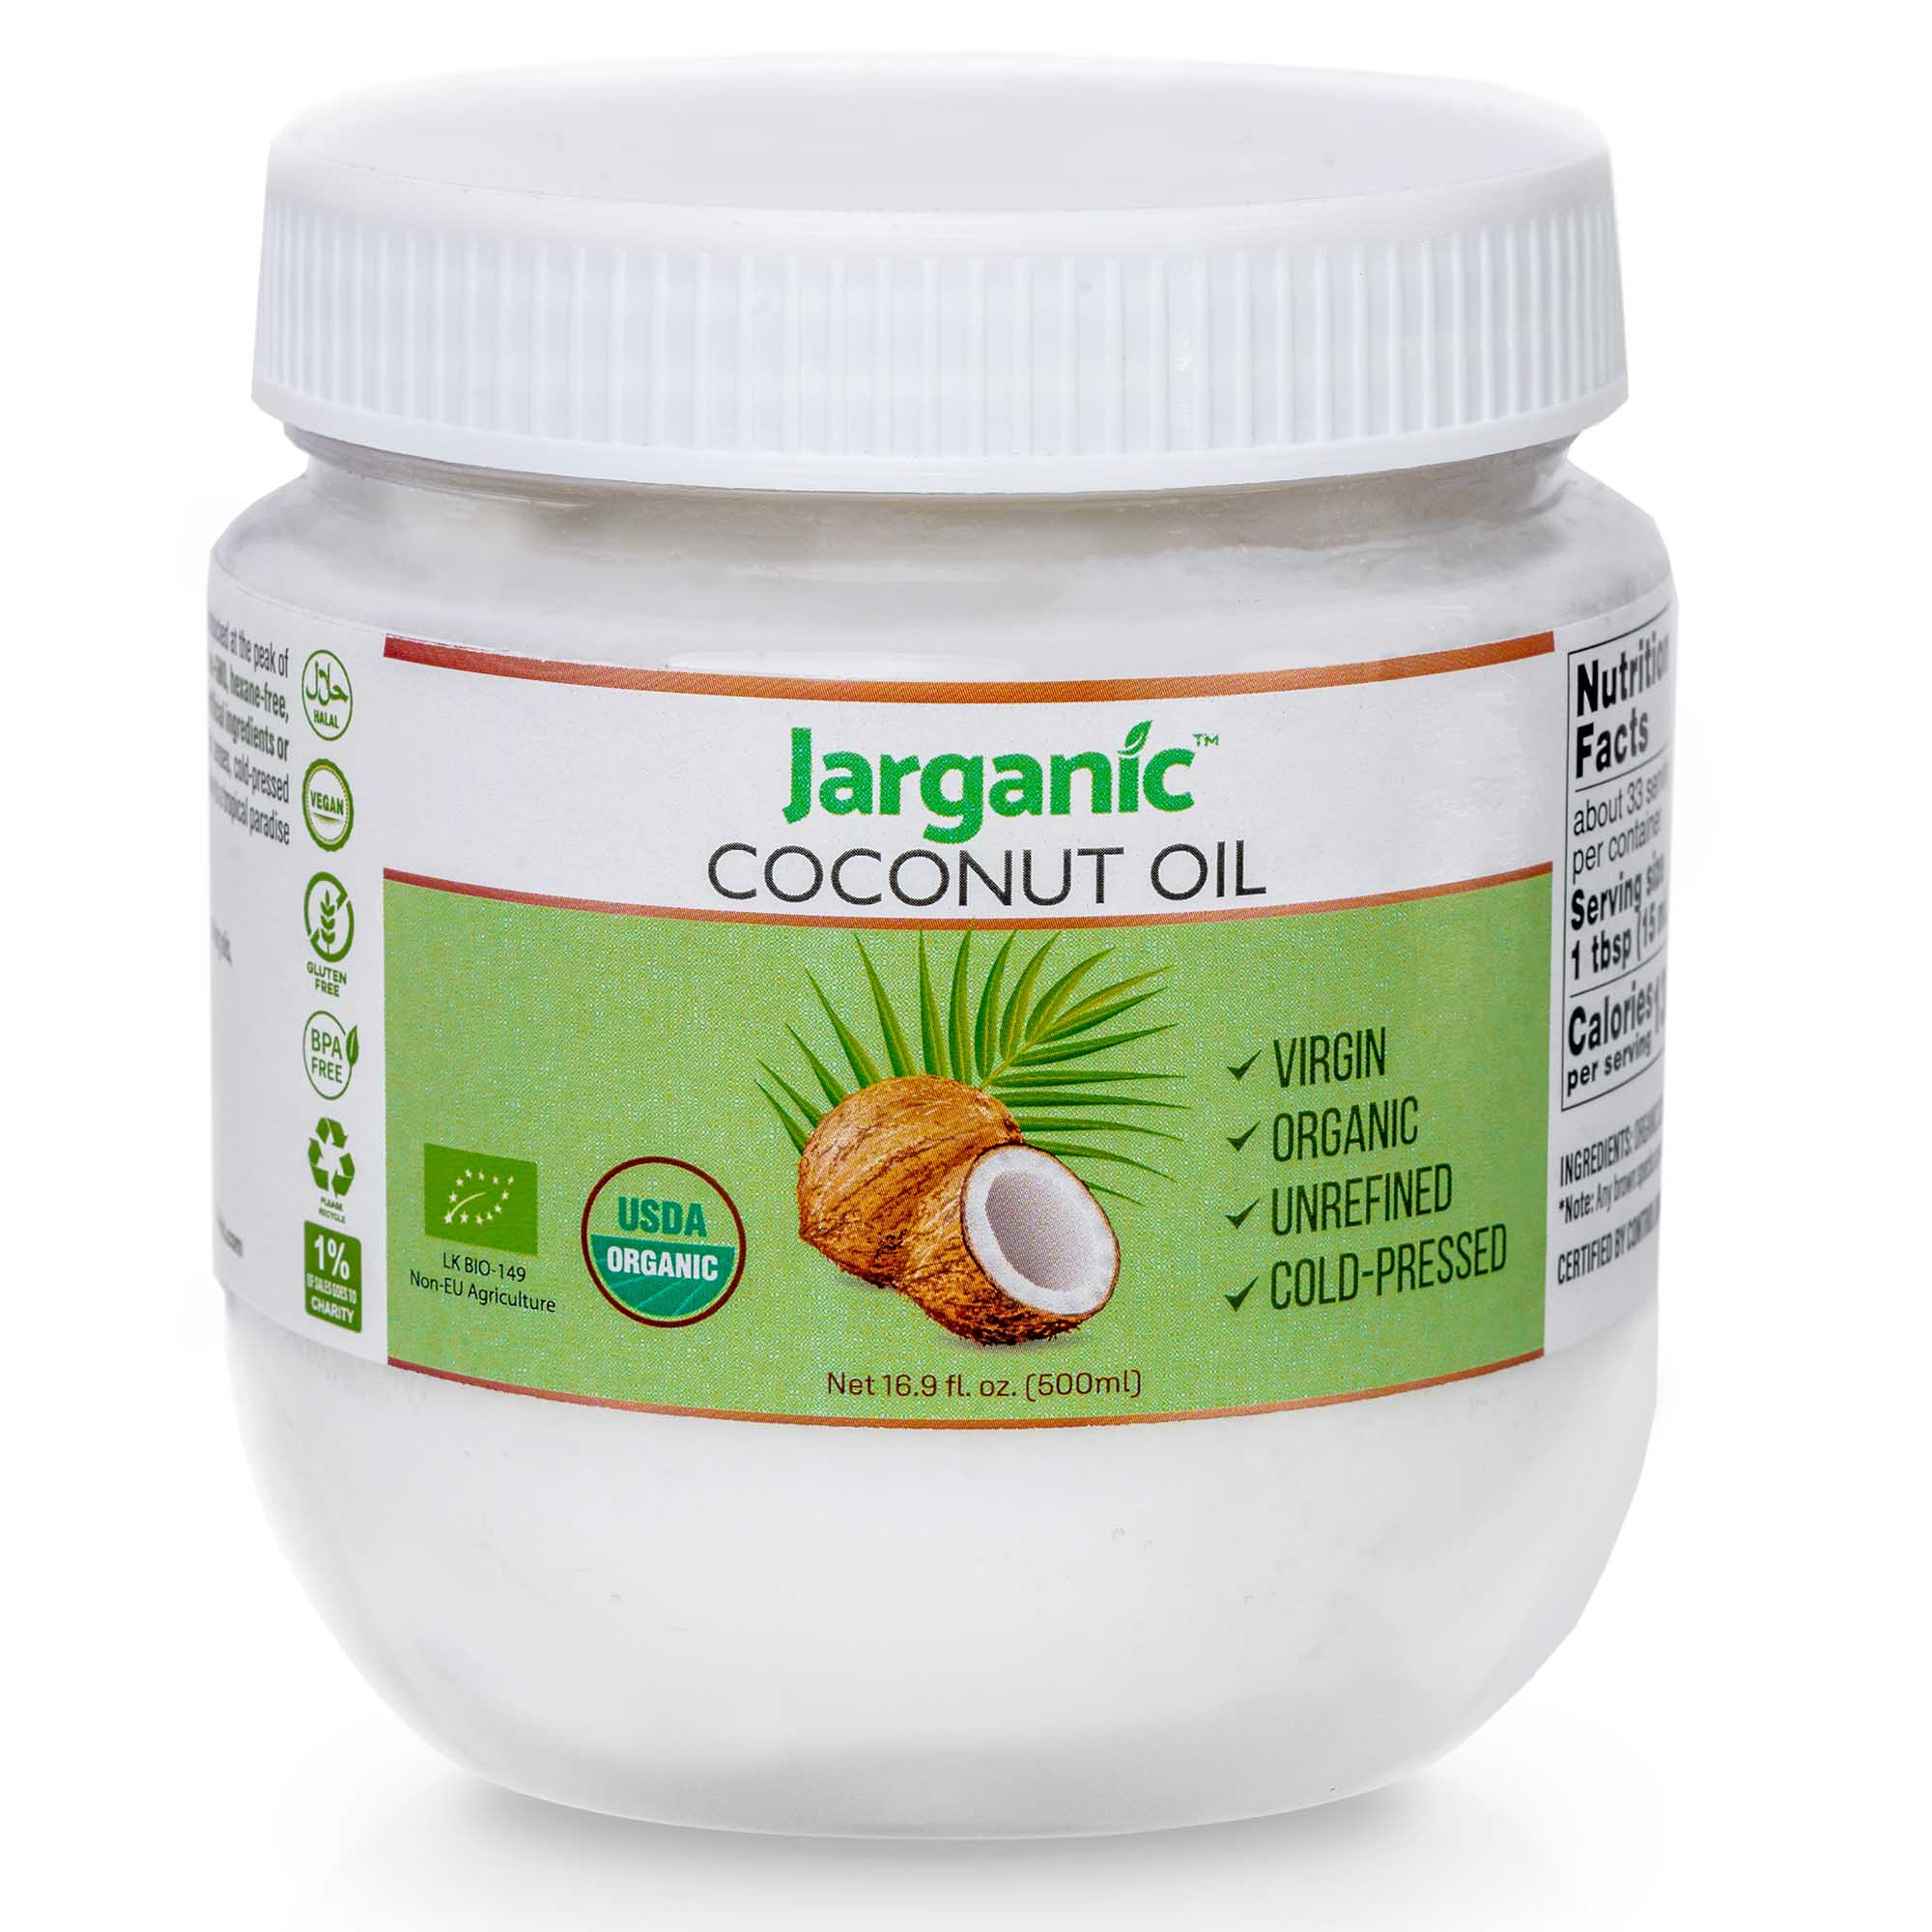 Organic Virgin Coconut Oil - Cold Pressed Unrefined Coconut Oil For Hair Skin And Cooking - Non-GMO, Gluten Free, Extra Virgin Coconut Oil 1